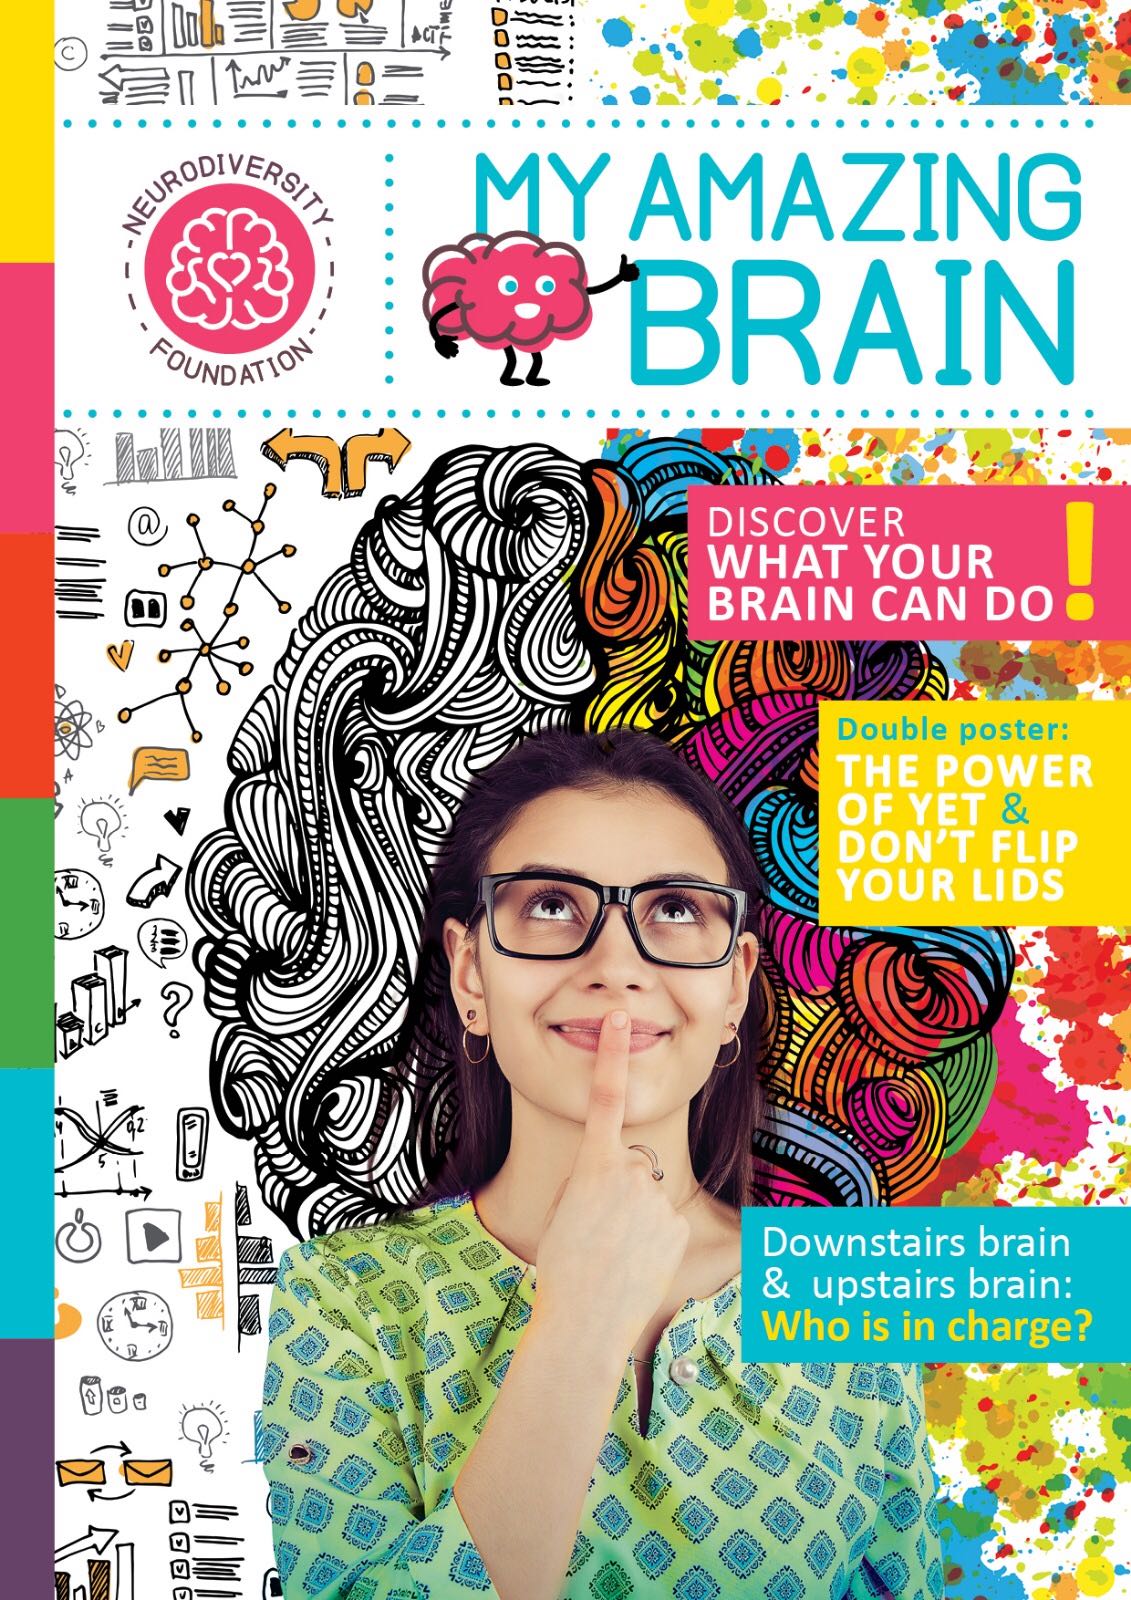 My Amazing Brain Magazine, made by Lana, Eleonora and Saskia